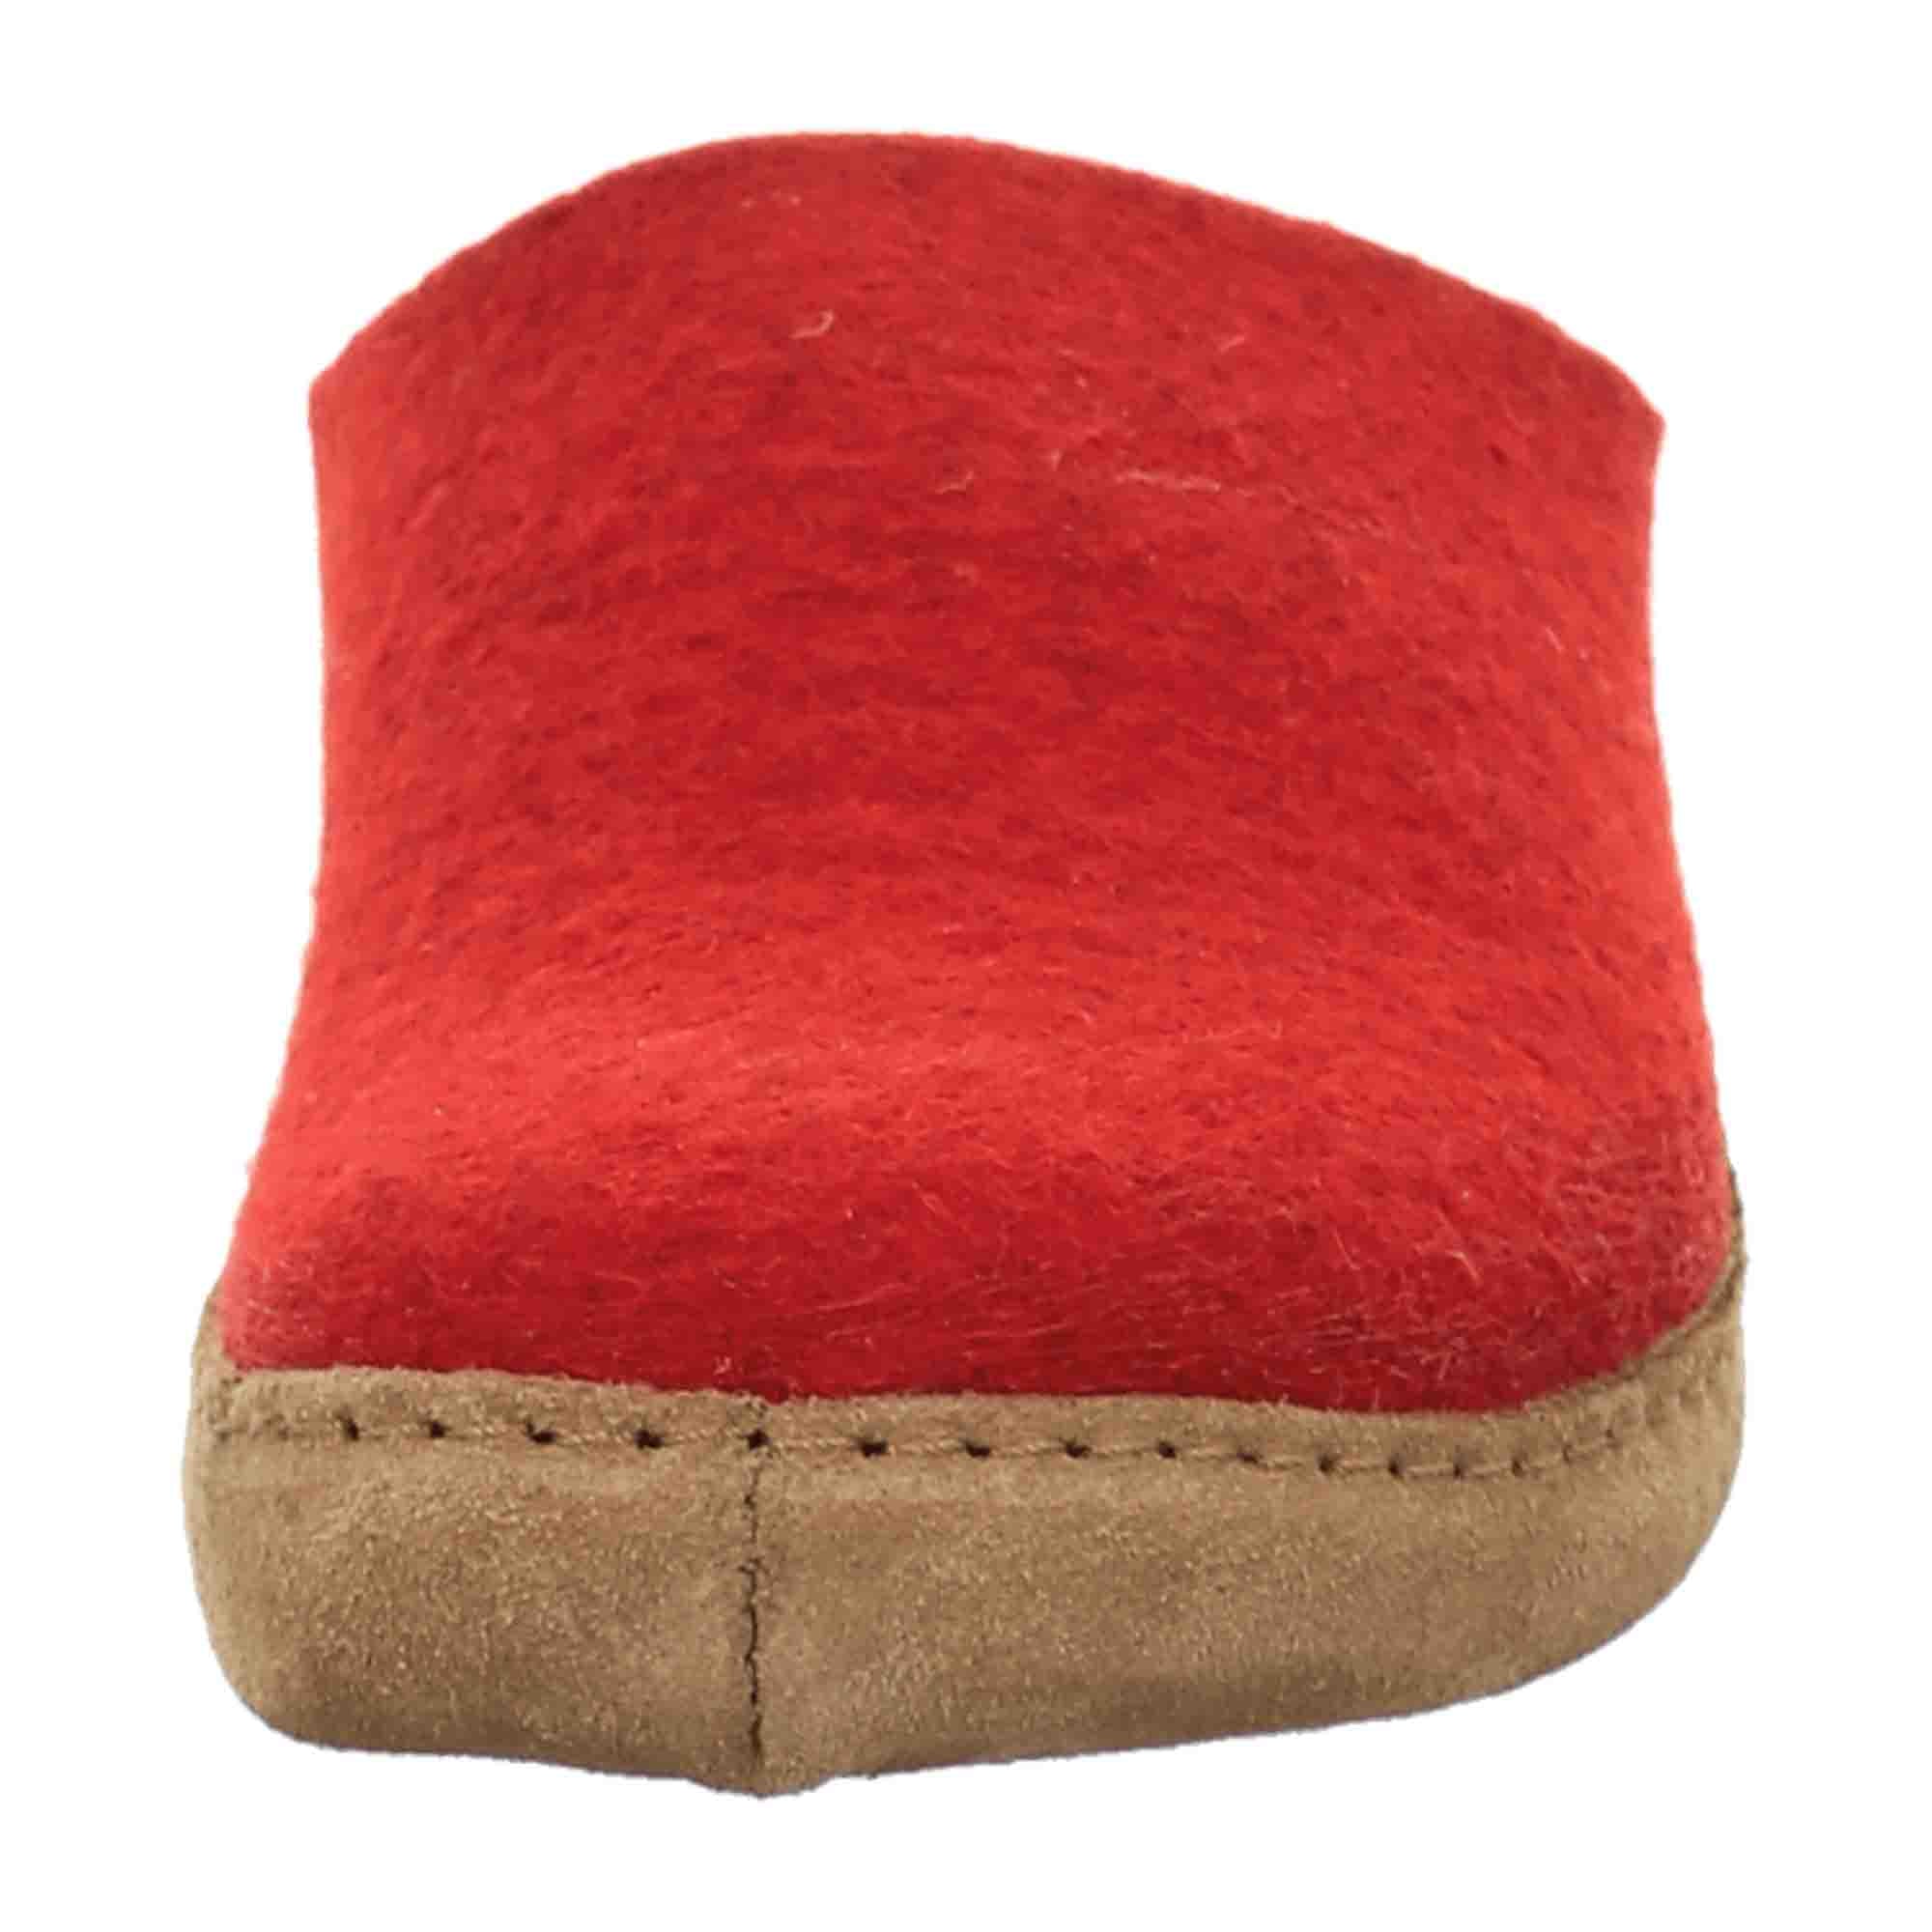 Haflinger Emil's Women's Slippers in Red - Stylish & Comfortable